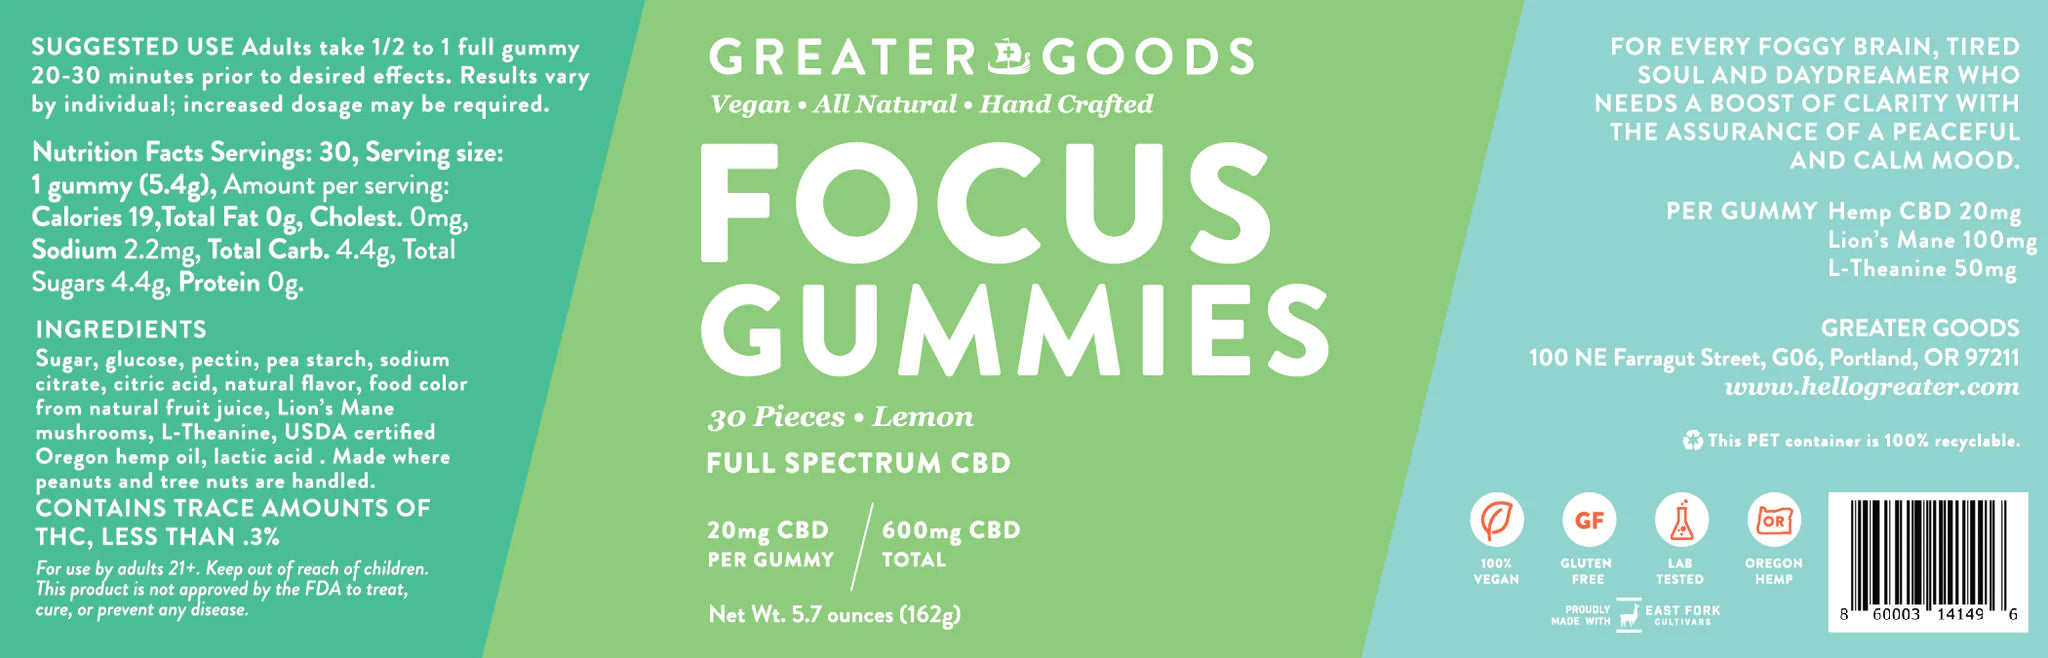 Greater Goods, Full Spectrum, CBD Gummies, Focus, Lemon Flavor, 30pc, 600mg CBD